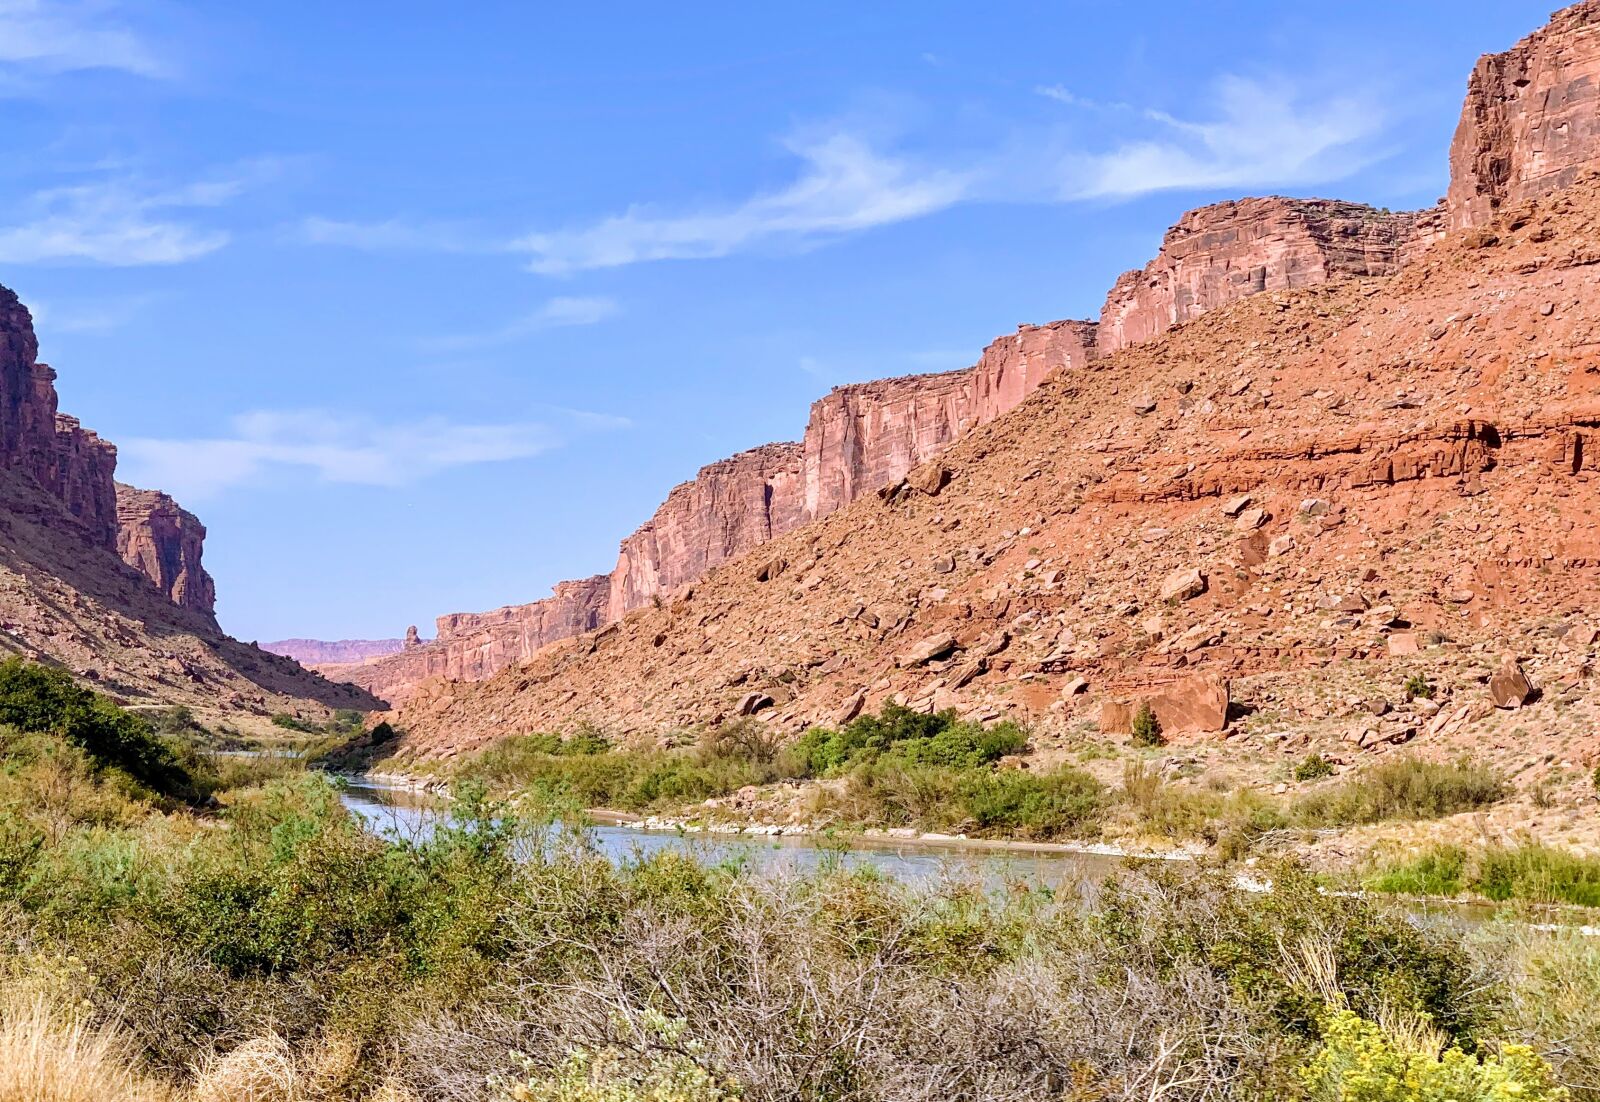 iPhone XS back dual camera 6mm f/2.4 sample photo. Utah, moab, colorado river photography